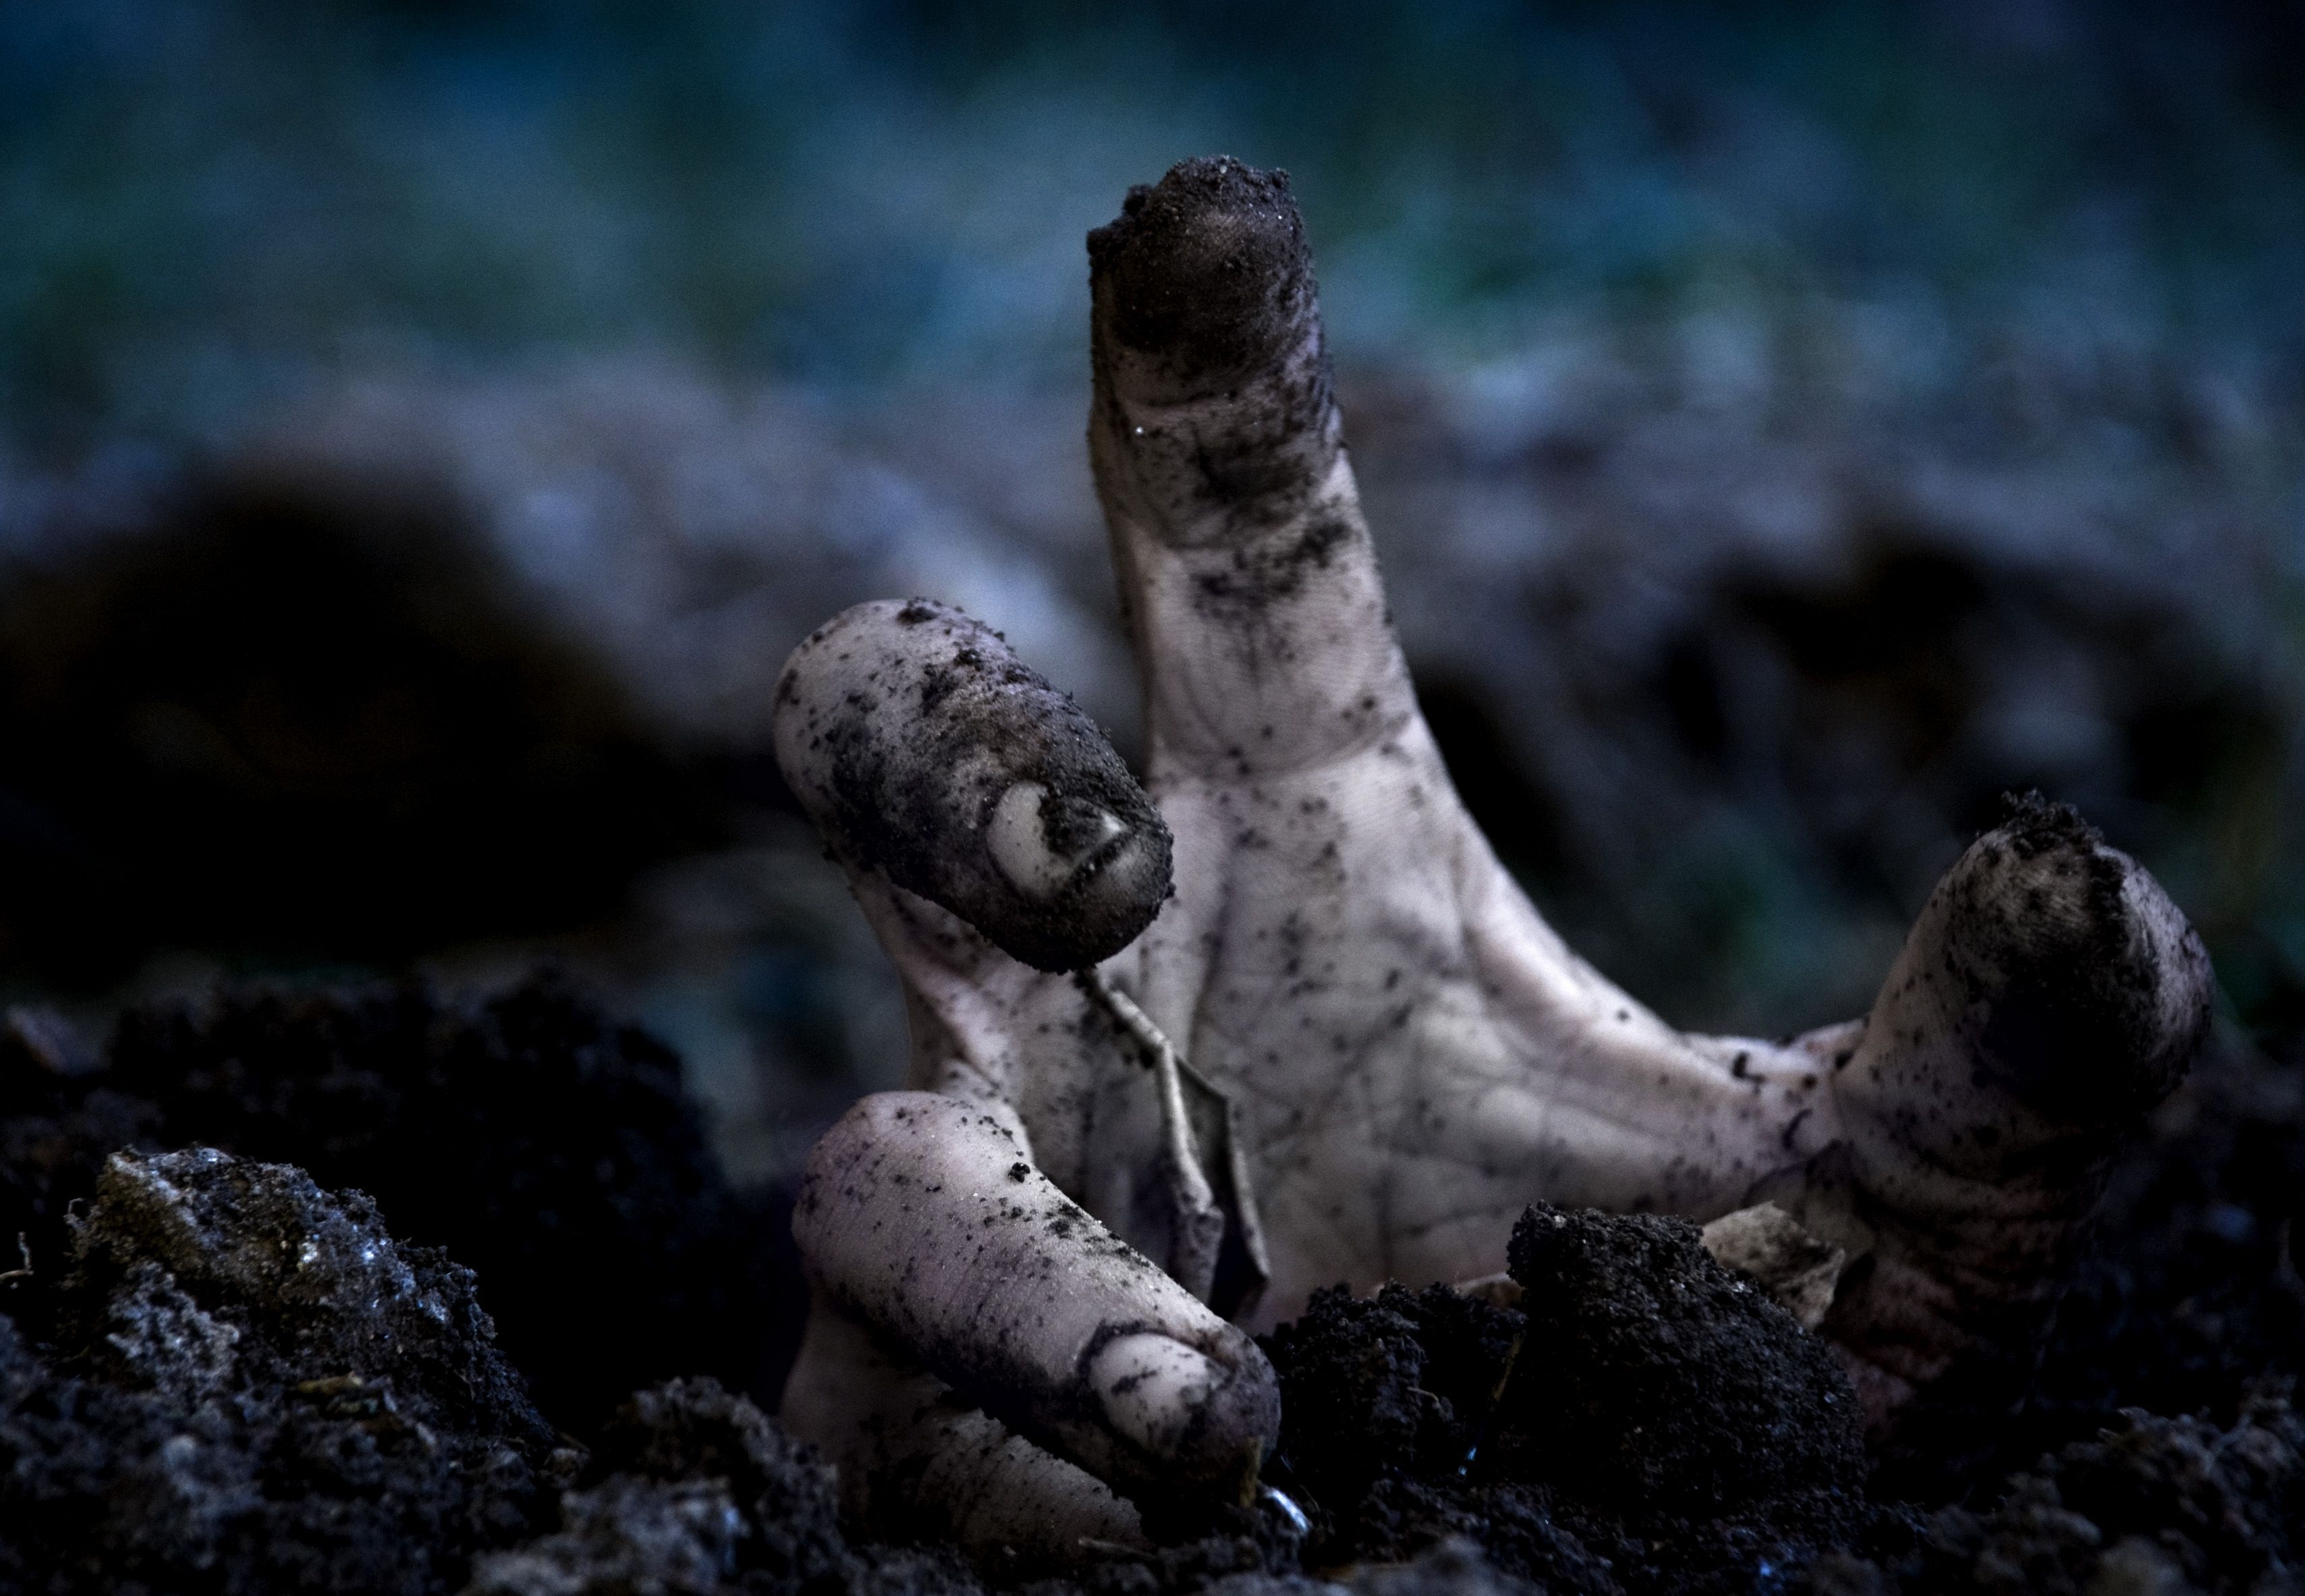 zombies hand dark night HD desktop background wallpapers | Daily ...